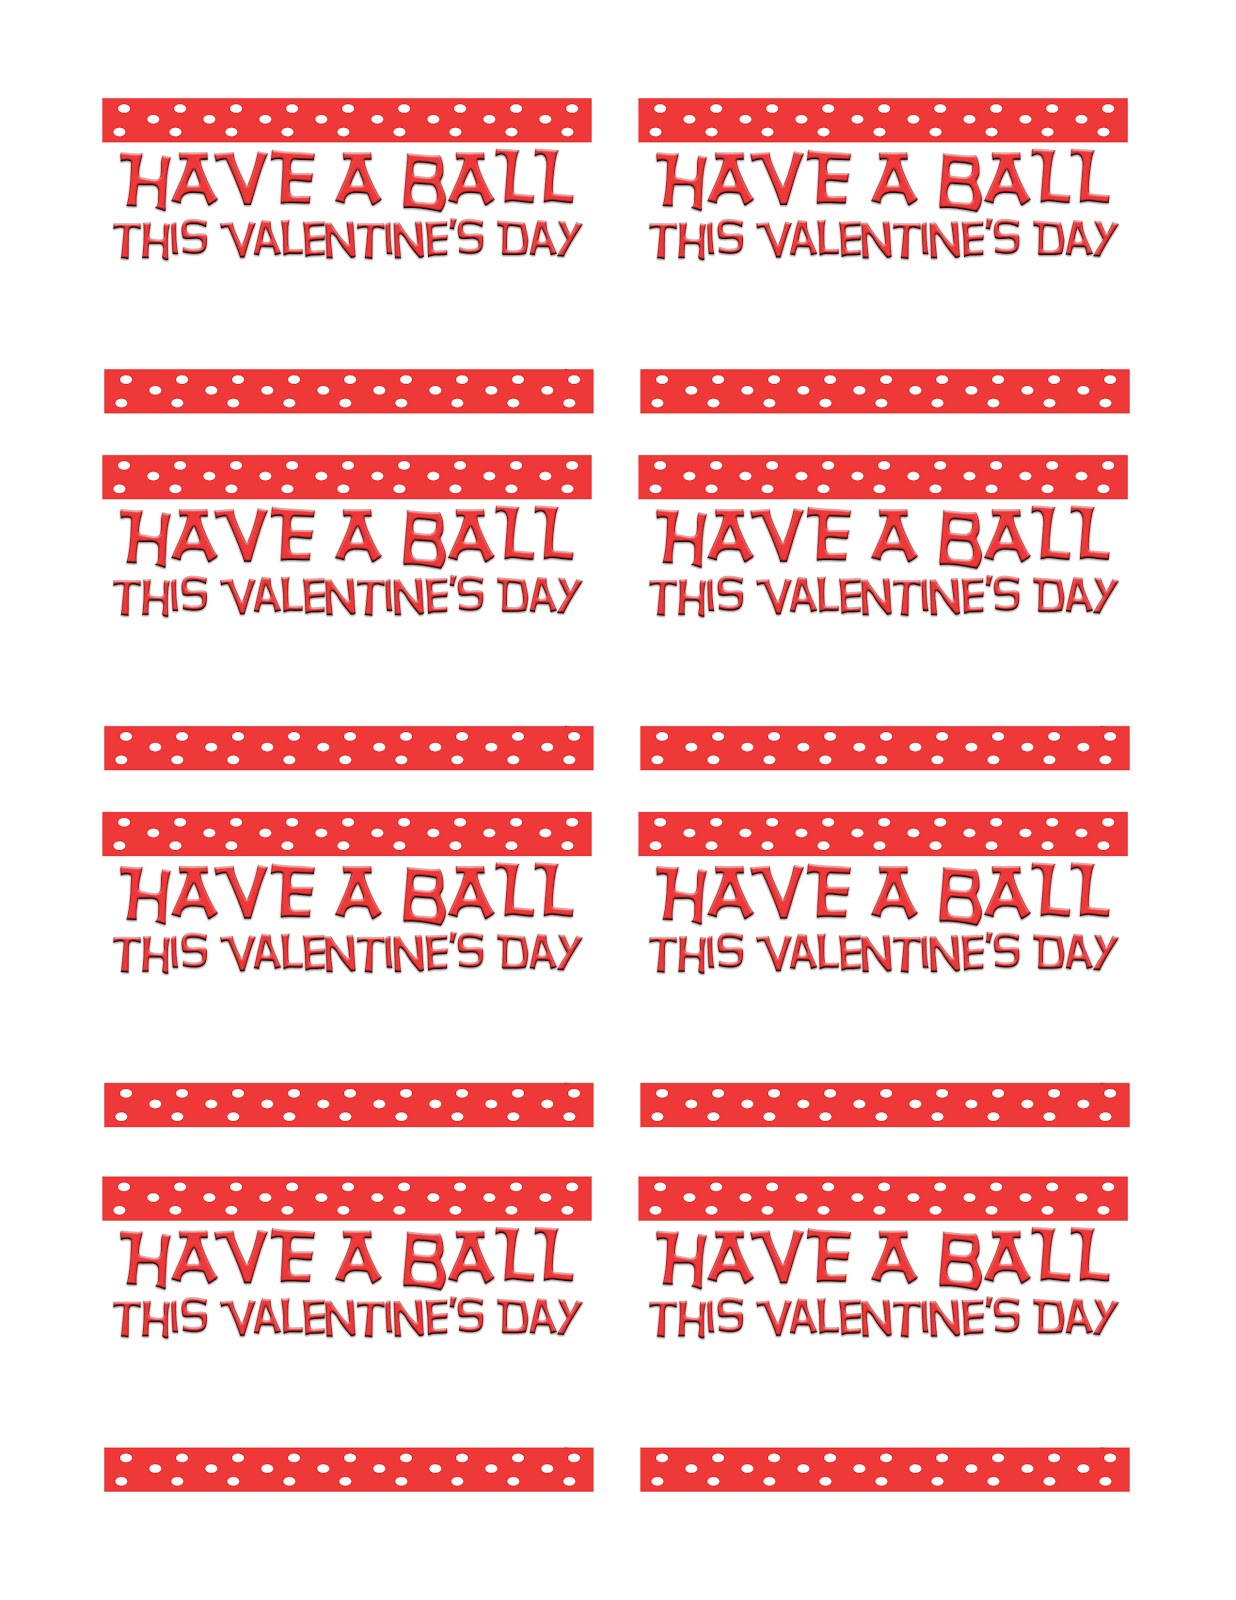 make-do-boys-have-a-ball-homemade-valentines